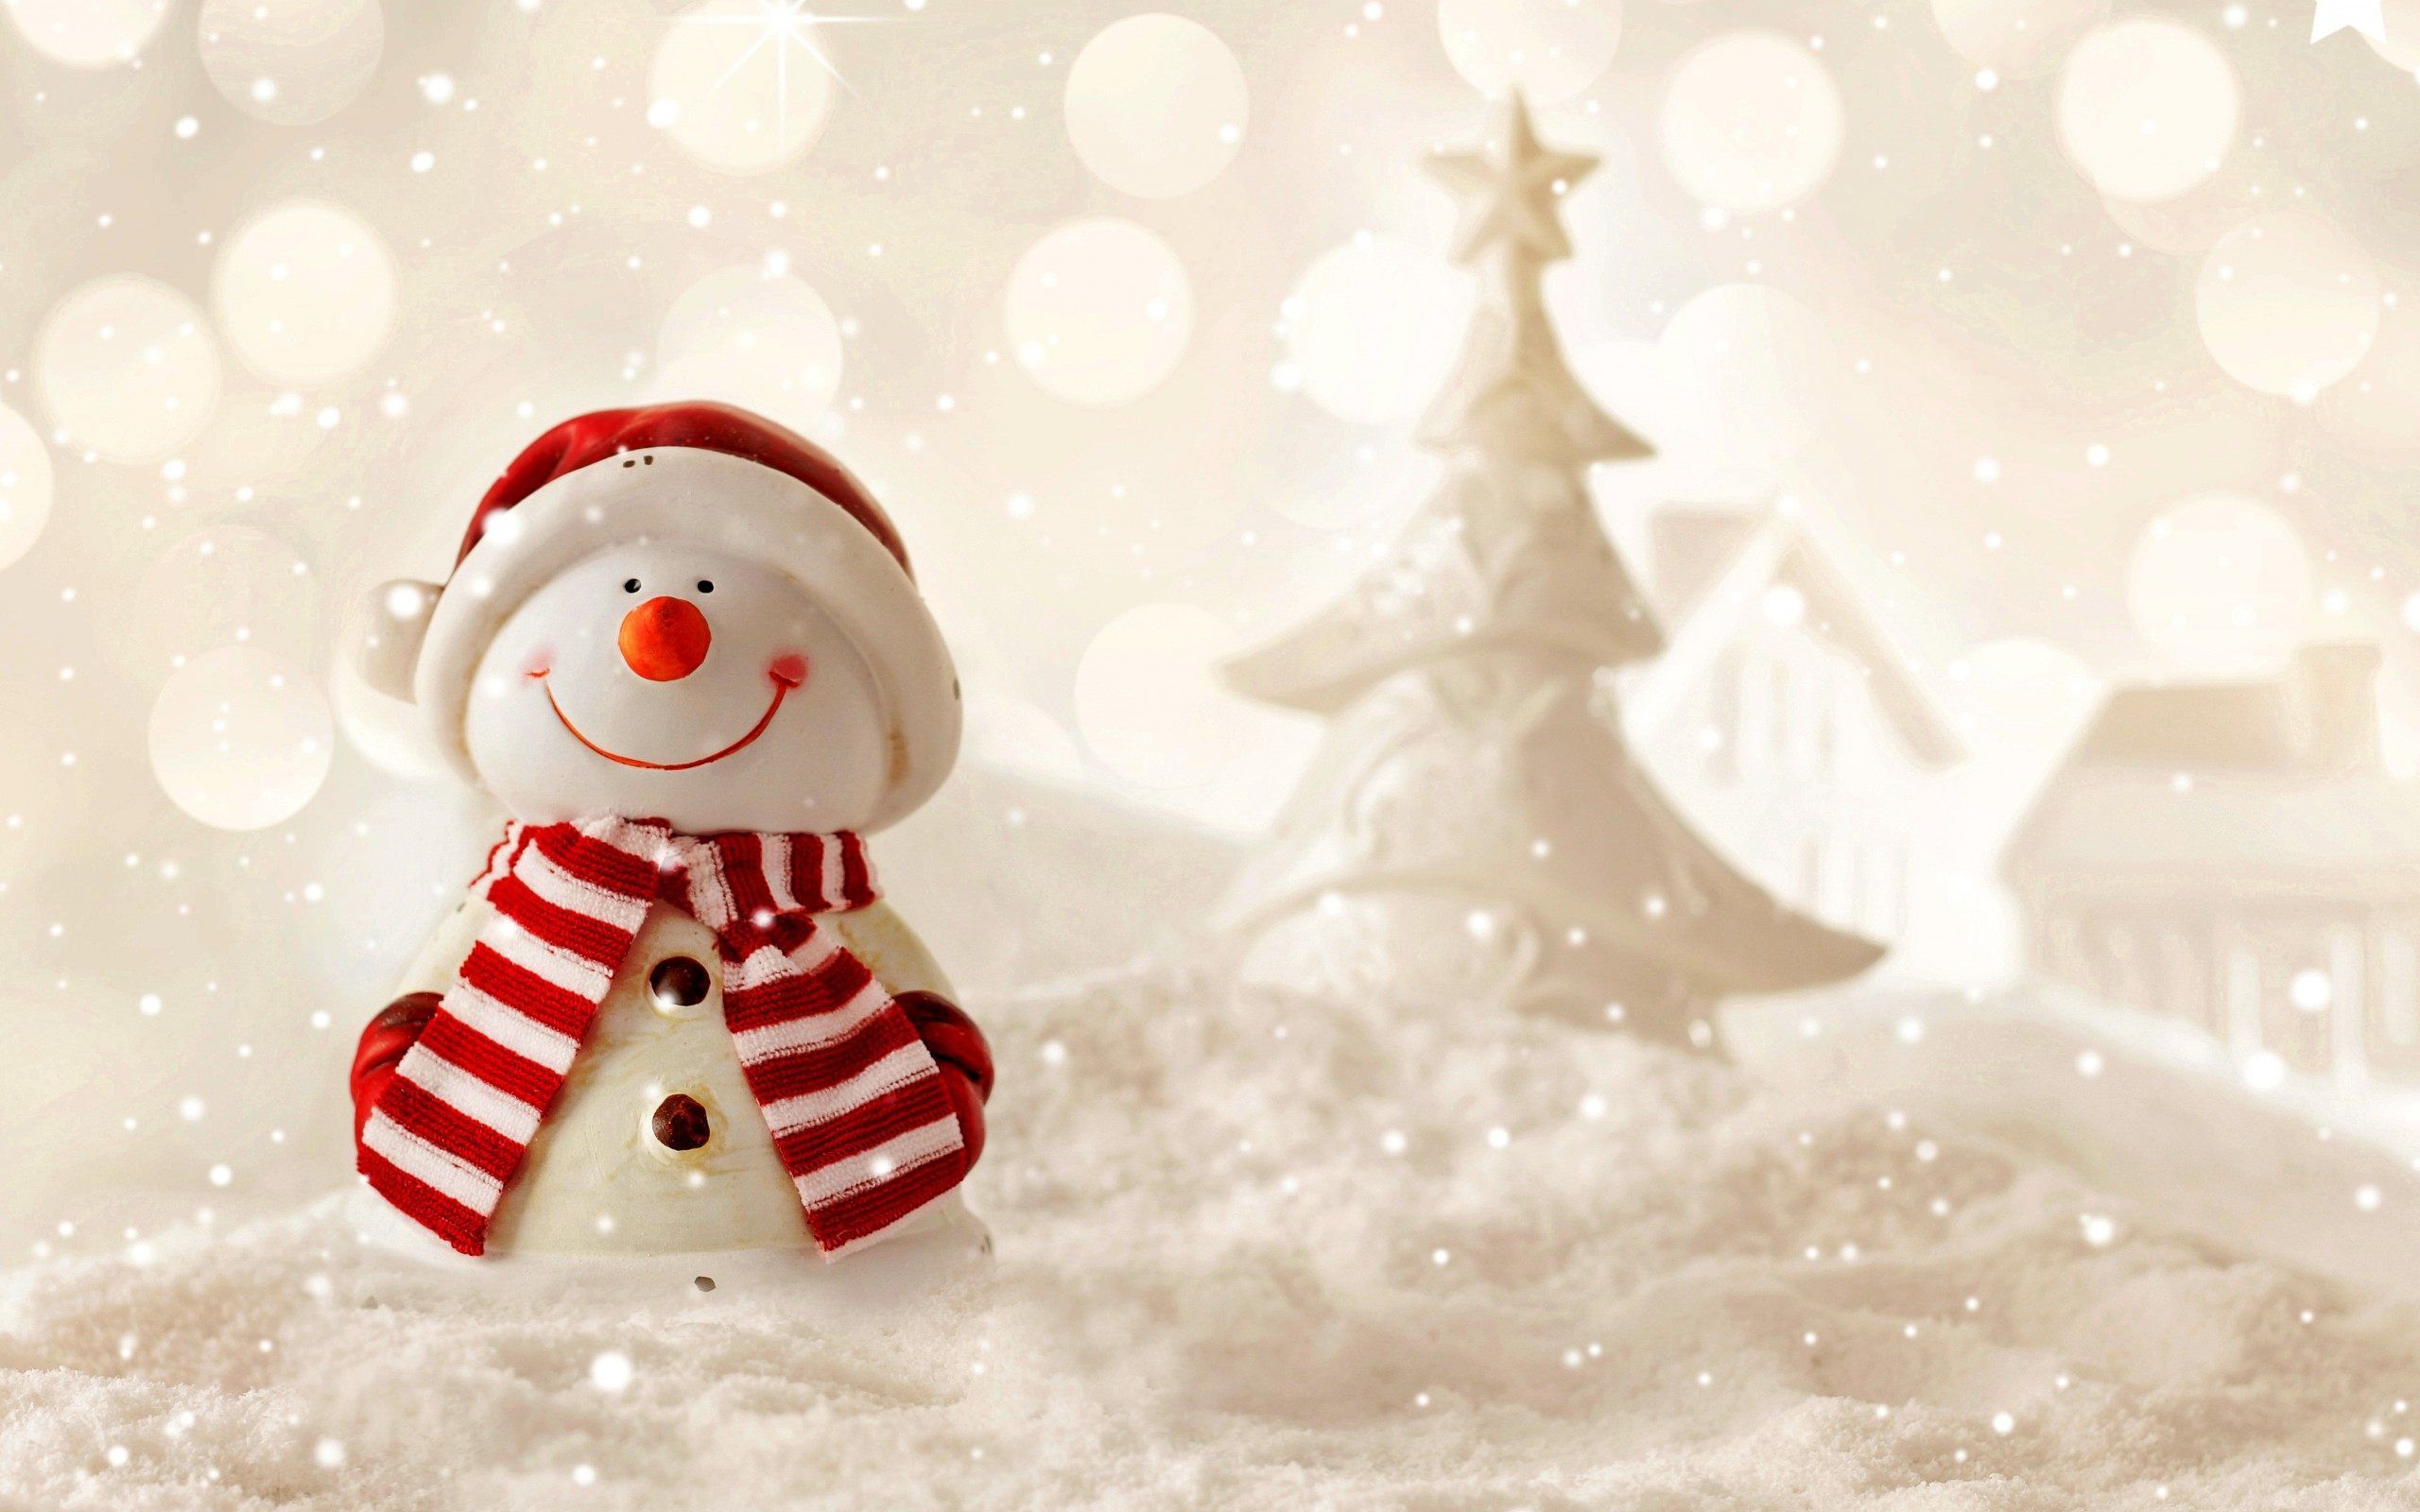 Snowman Wallpaper Images, HD Pictures For Free Vectors Download -  Lovepik.com